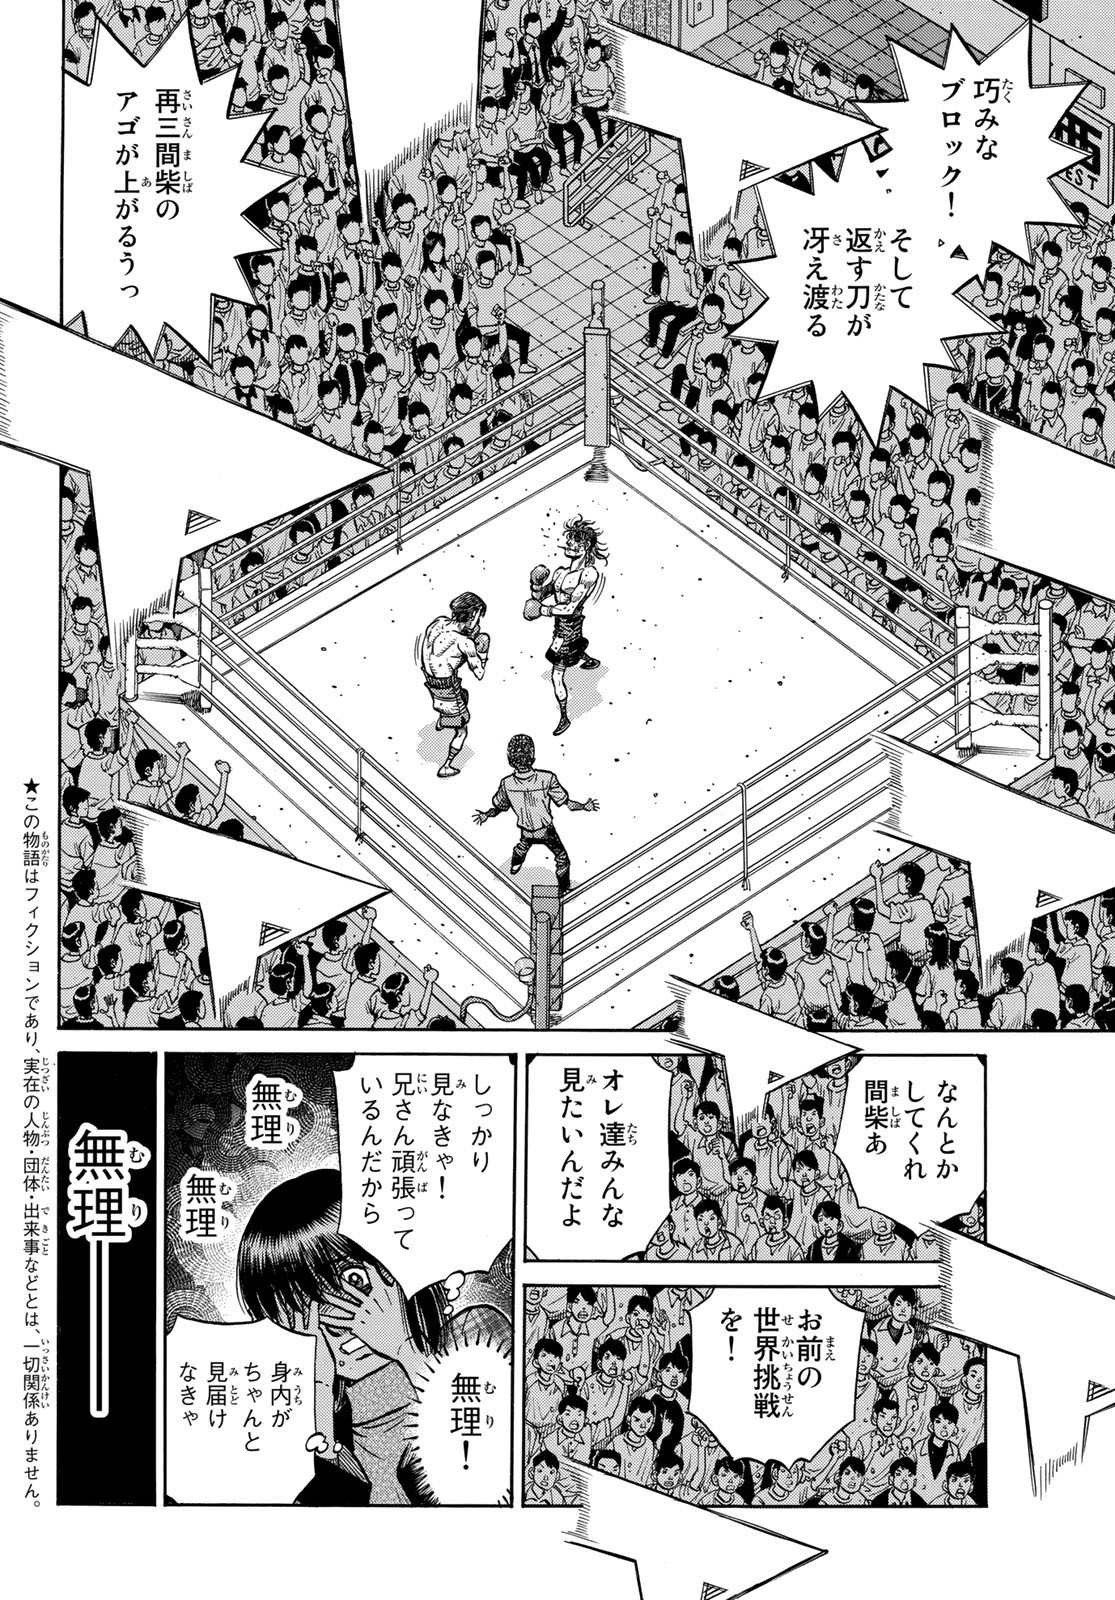 Hajime no Ippo - Chapter 1371 - Page 2